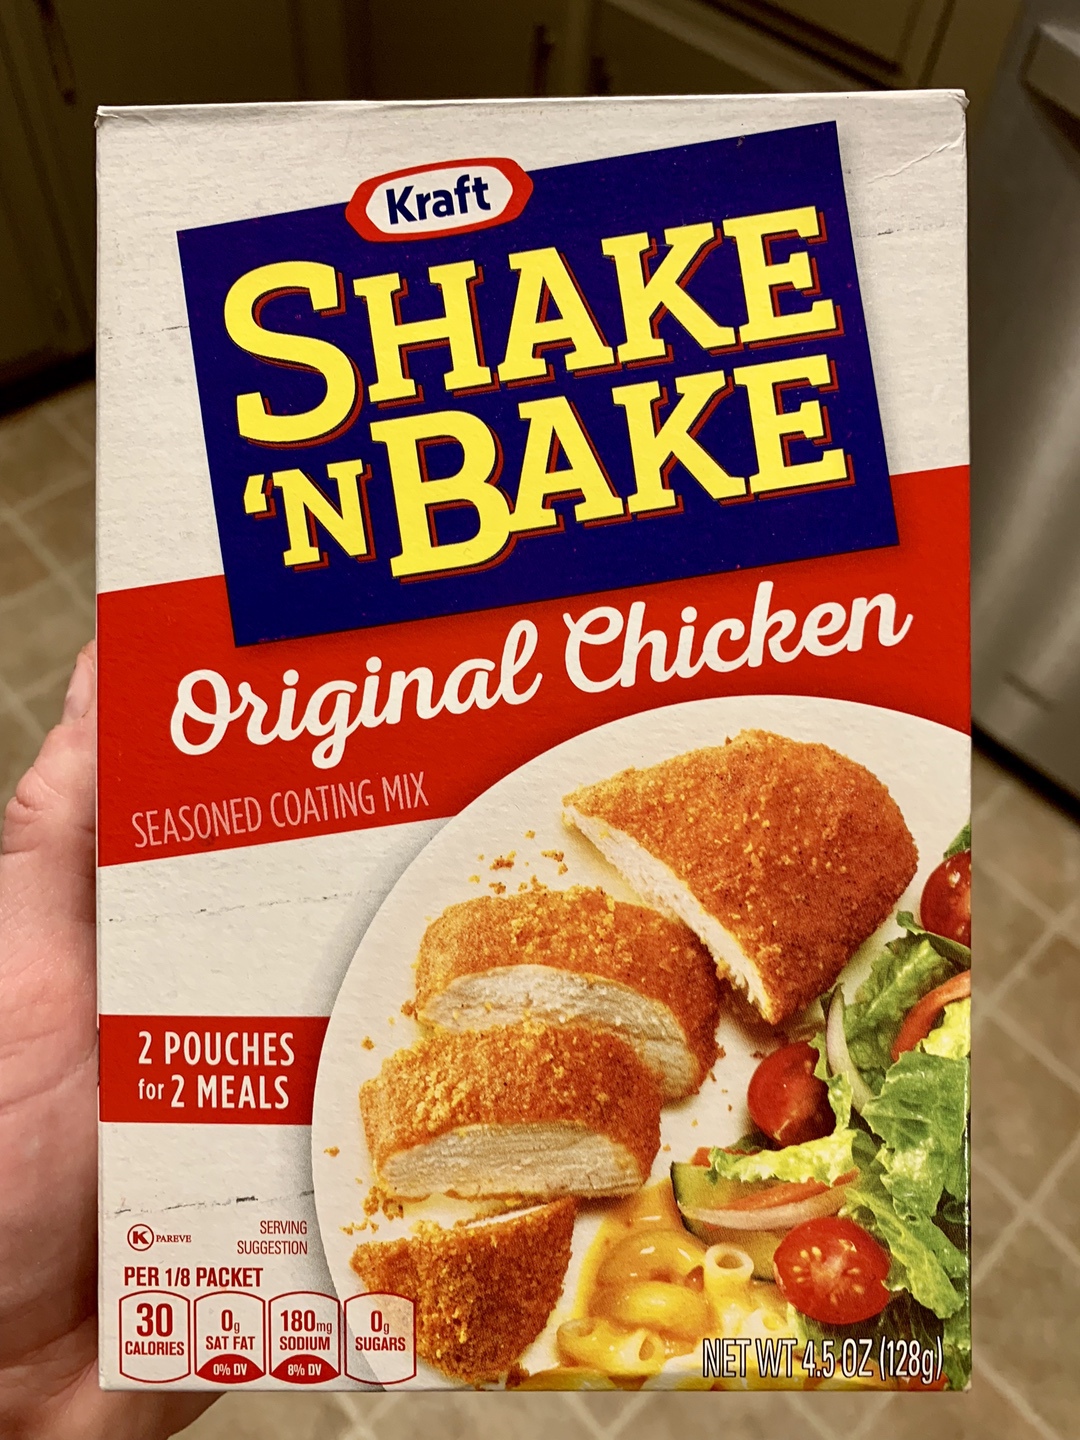 Crispy Baked Chicken with Shake 'n Bake